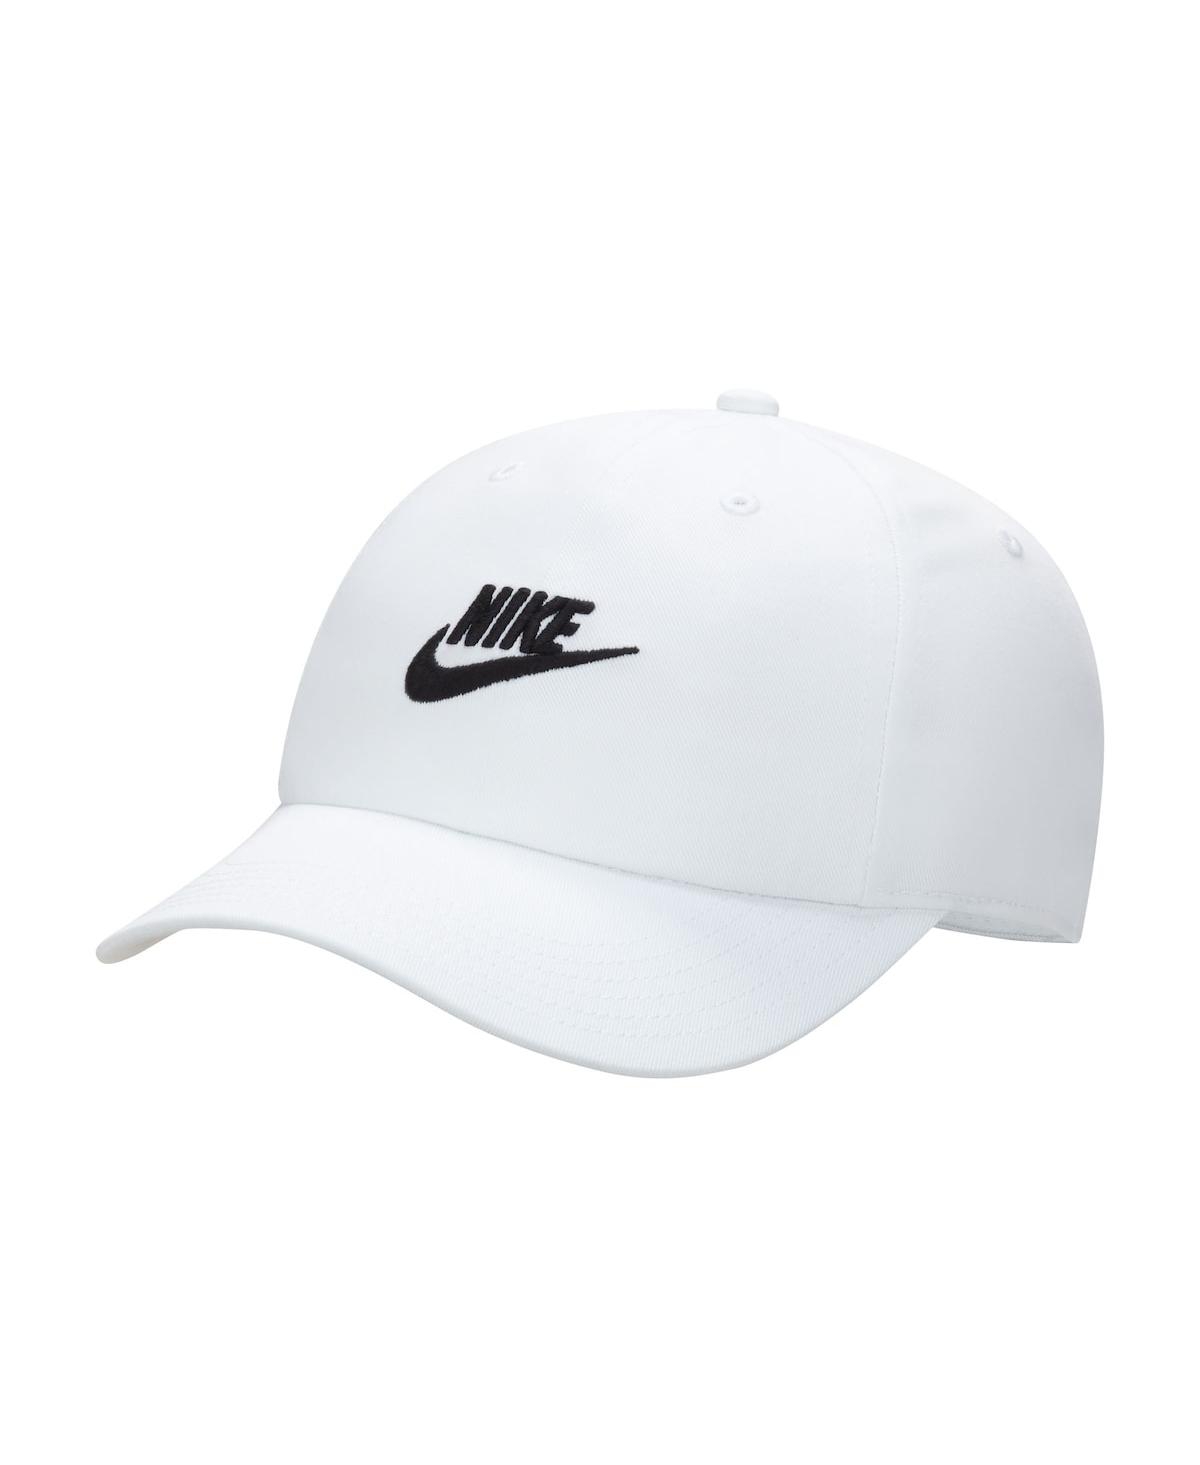 Nike Kids' Youth Boys And Girls  White Futura Club Performance Adjustable Hat